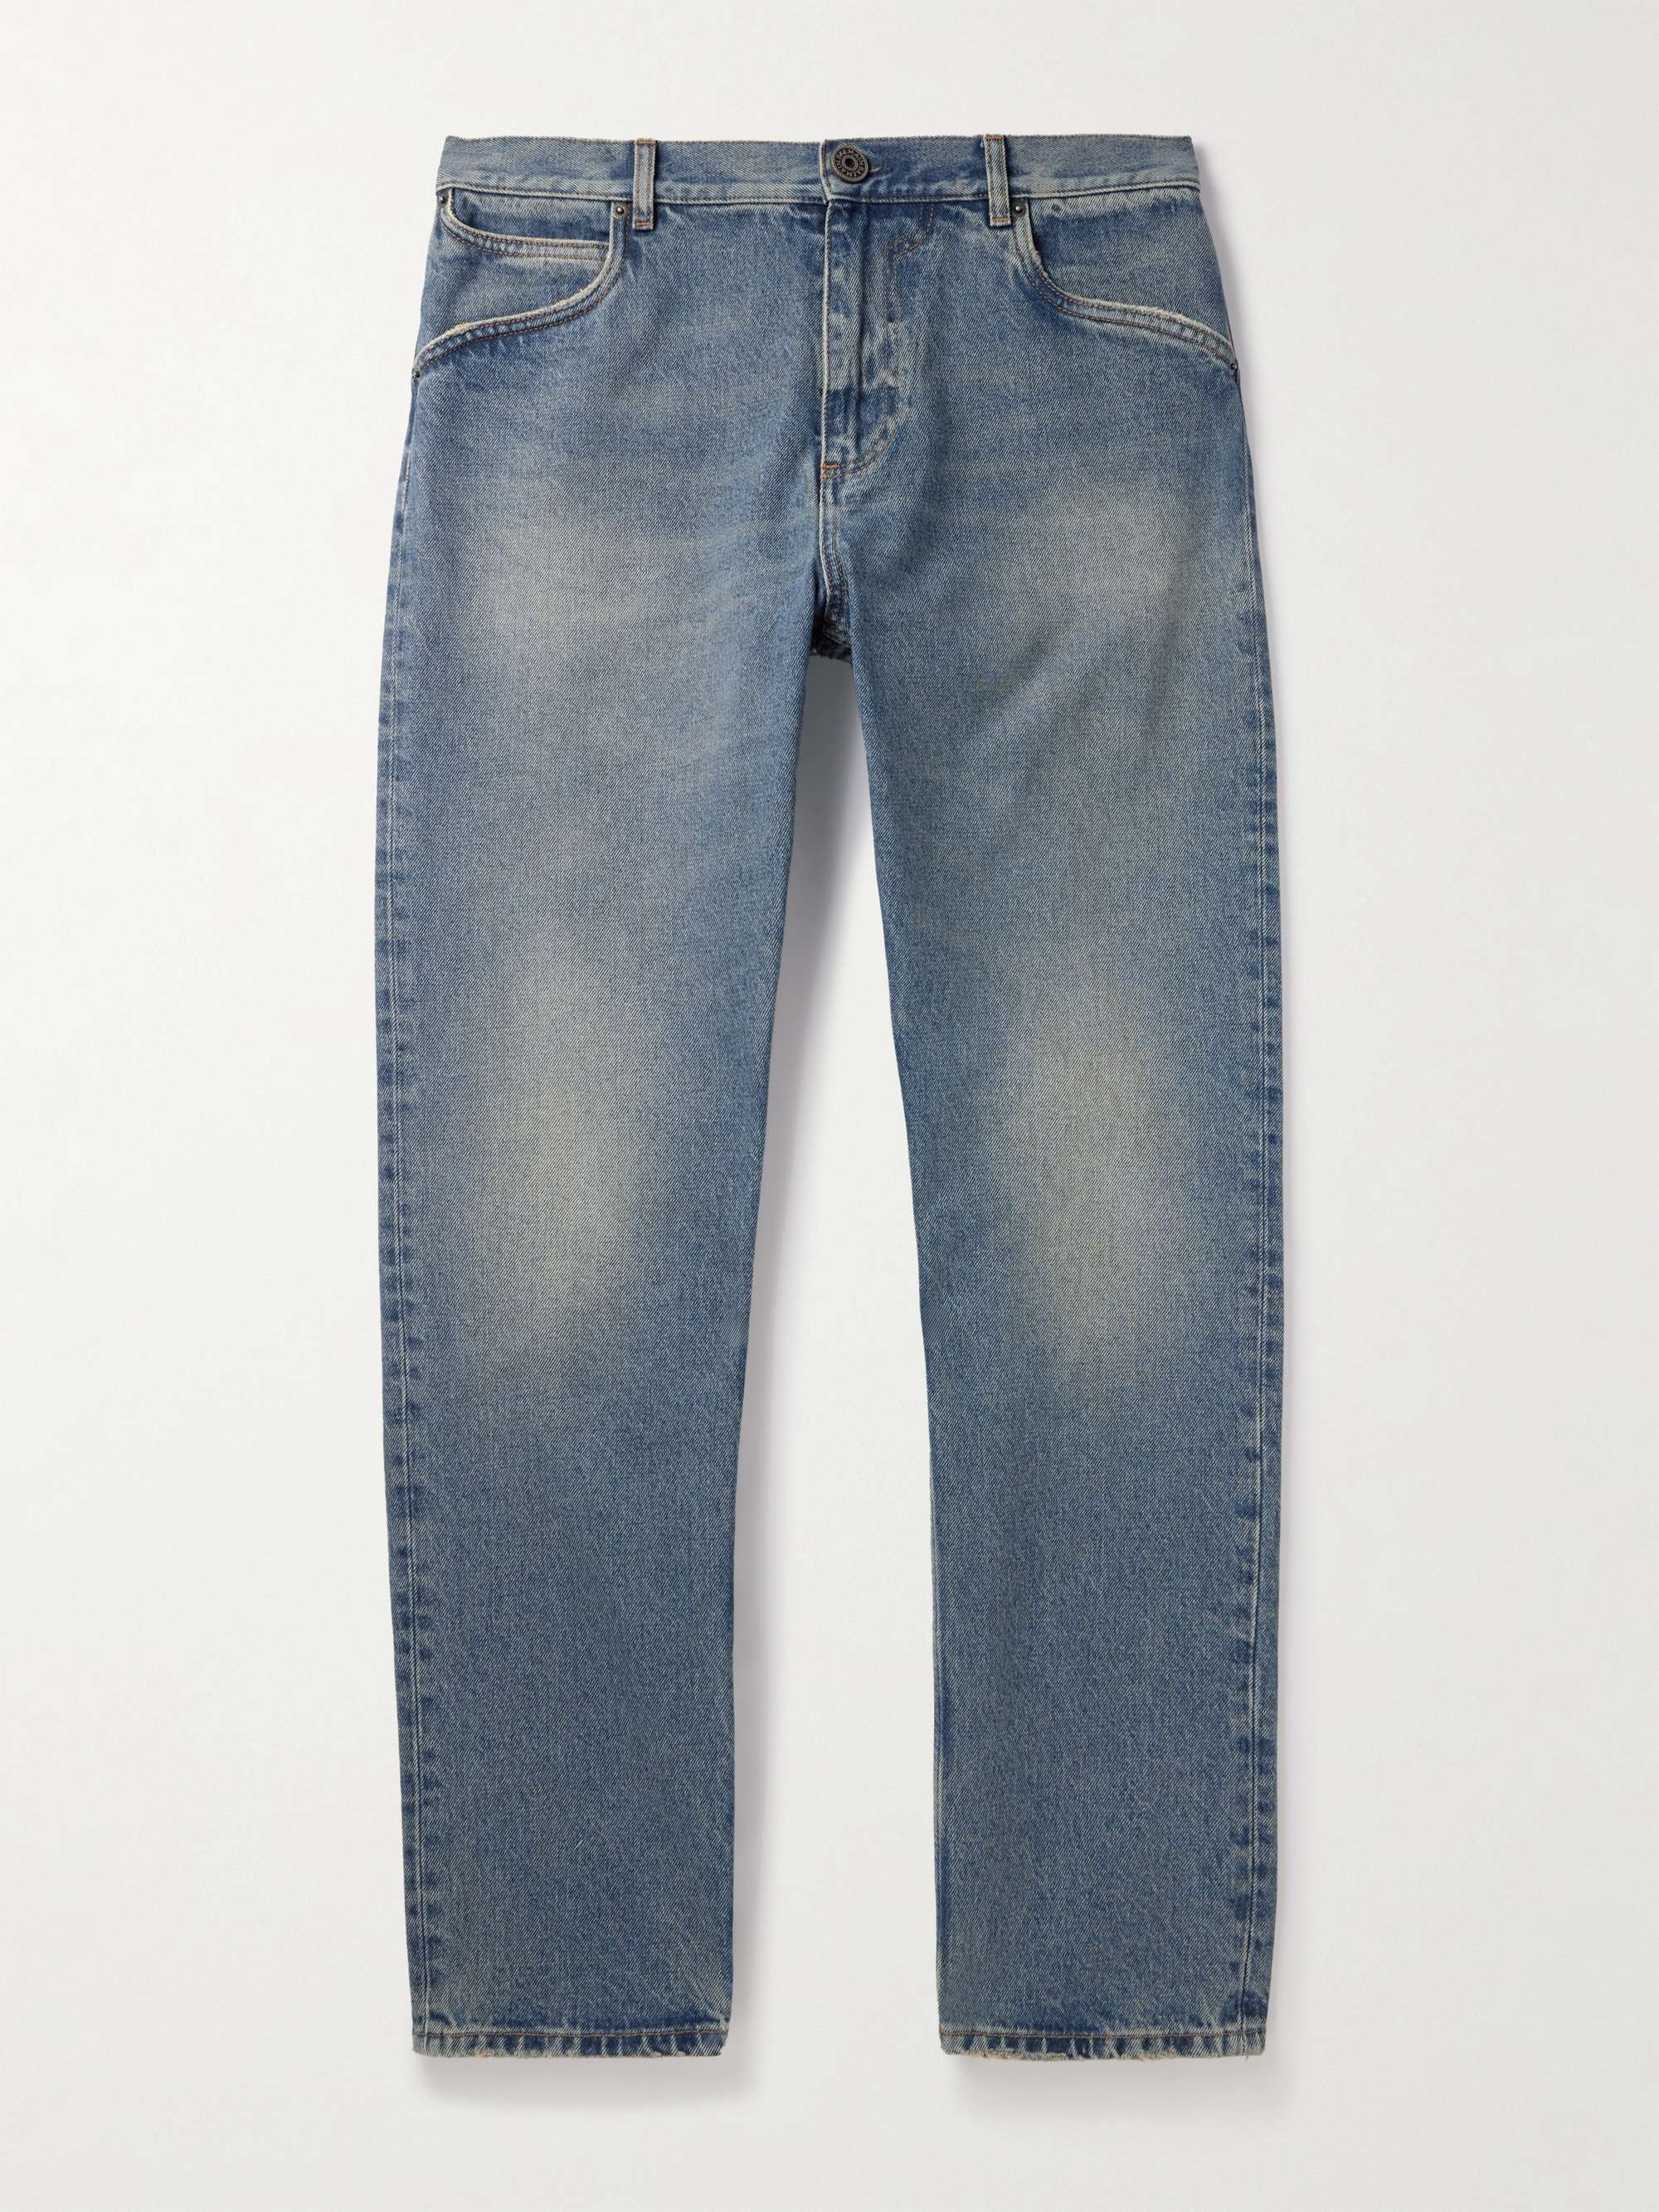 balmain Wide leg jeans available on theapartmentcosenza.com - 31057 - US